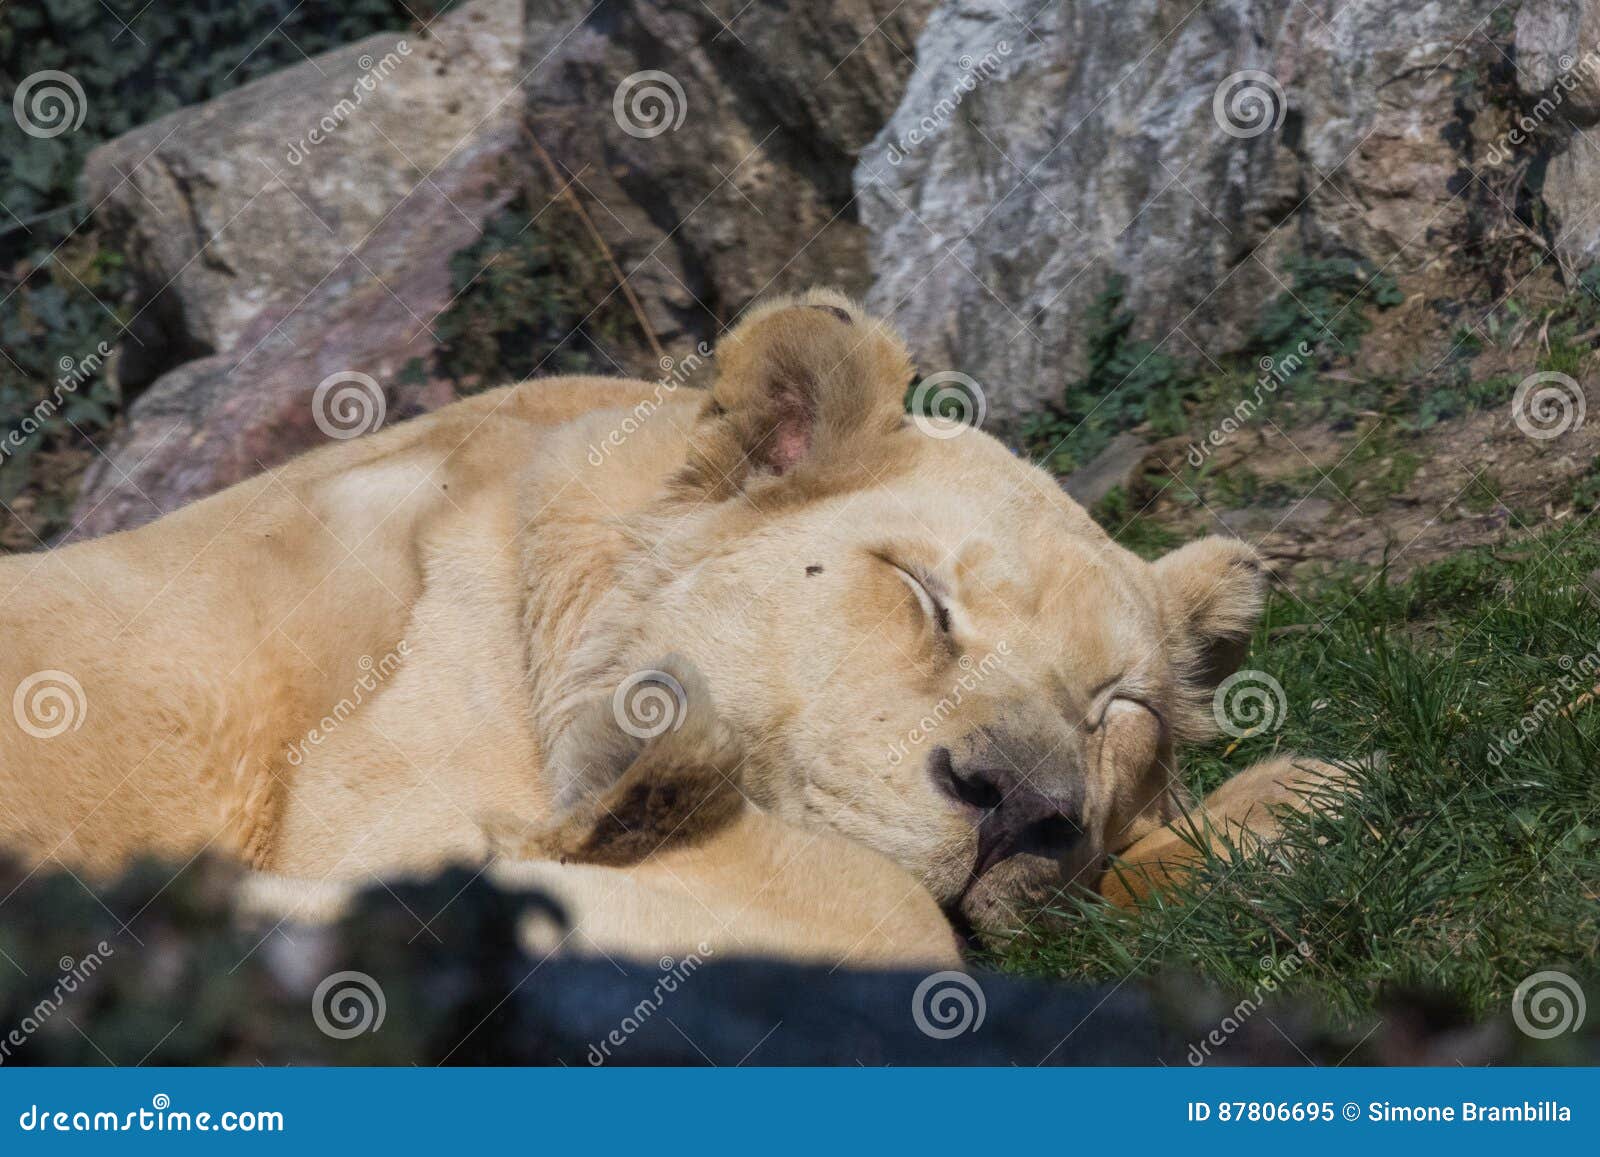 lioness sleeping on the grass. leonessa a riposo - grande felino